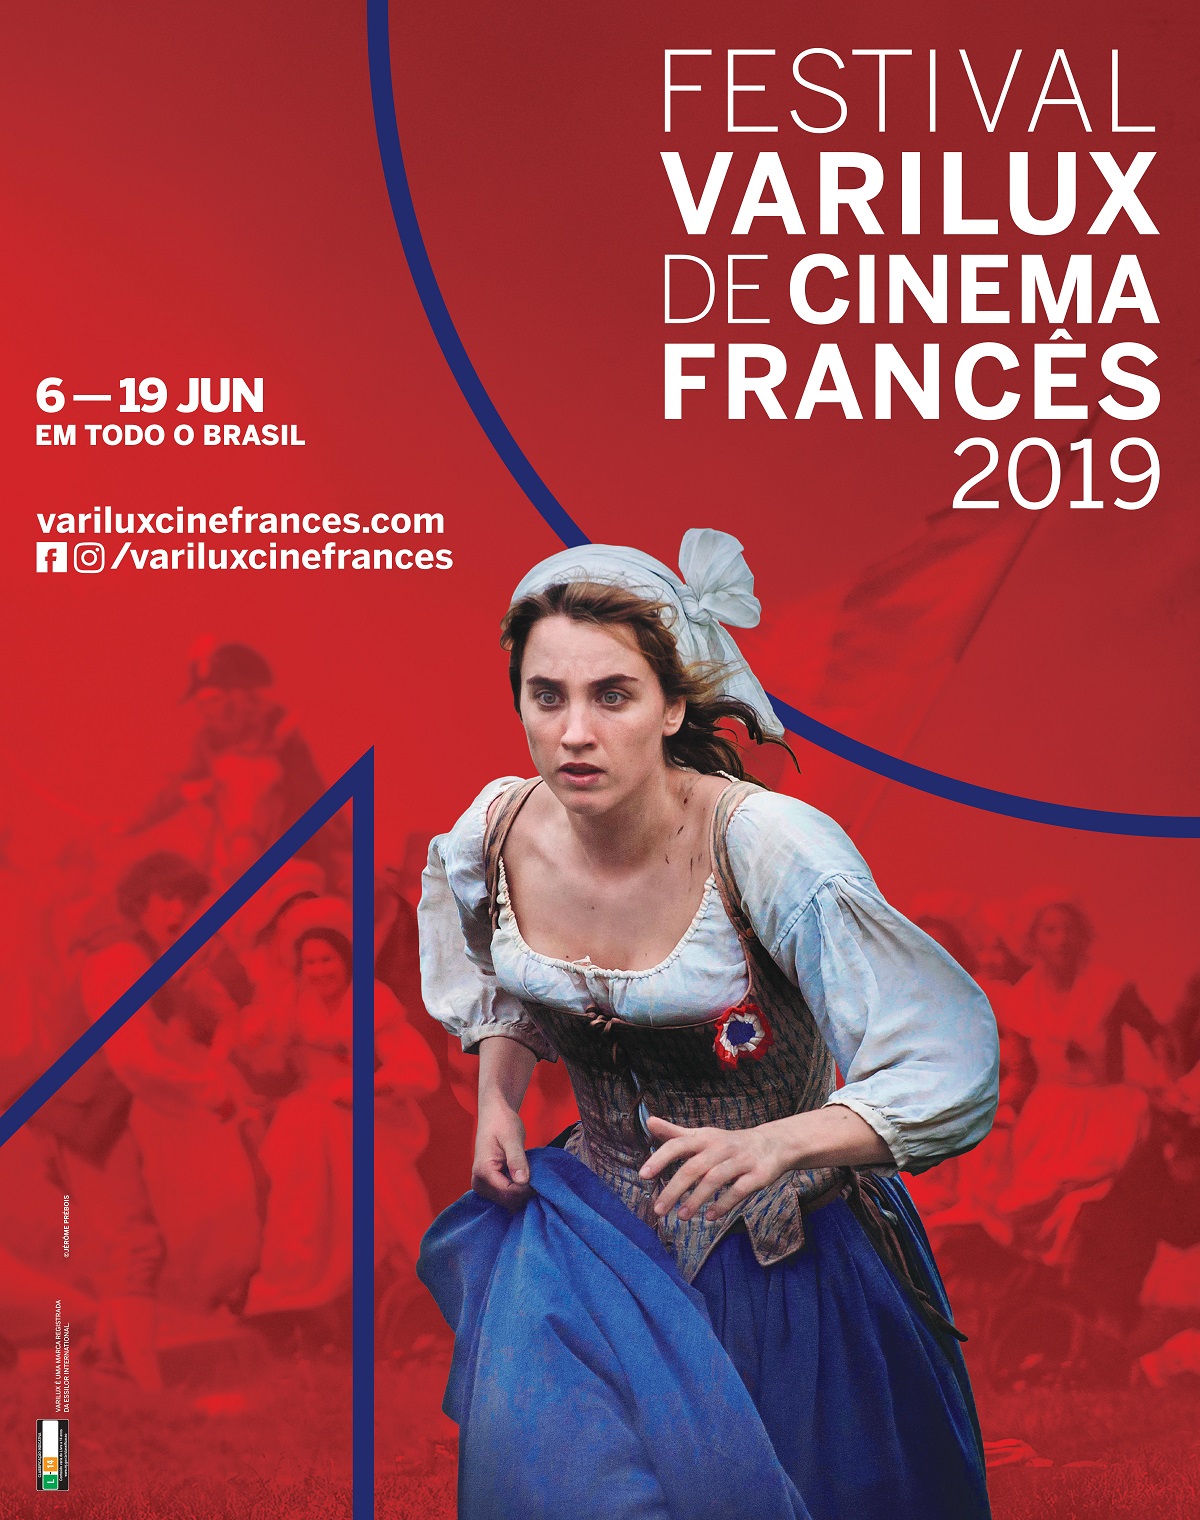 Festival Varilux de Cinema Francês 2019 (1) - Copia